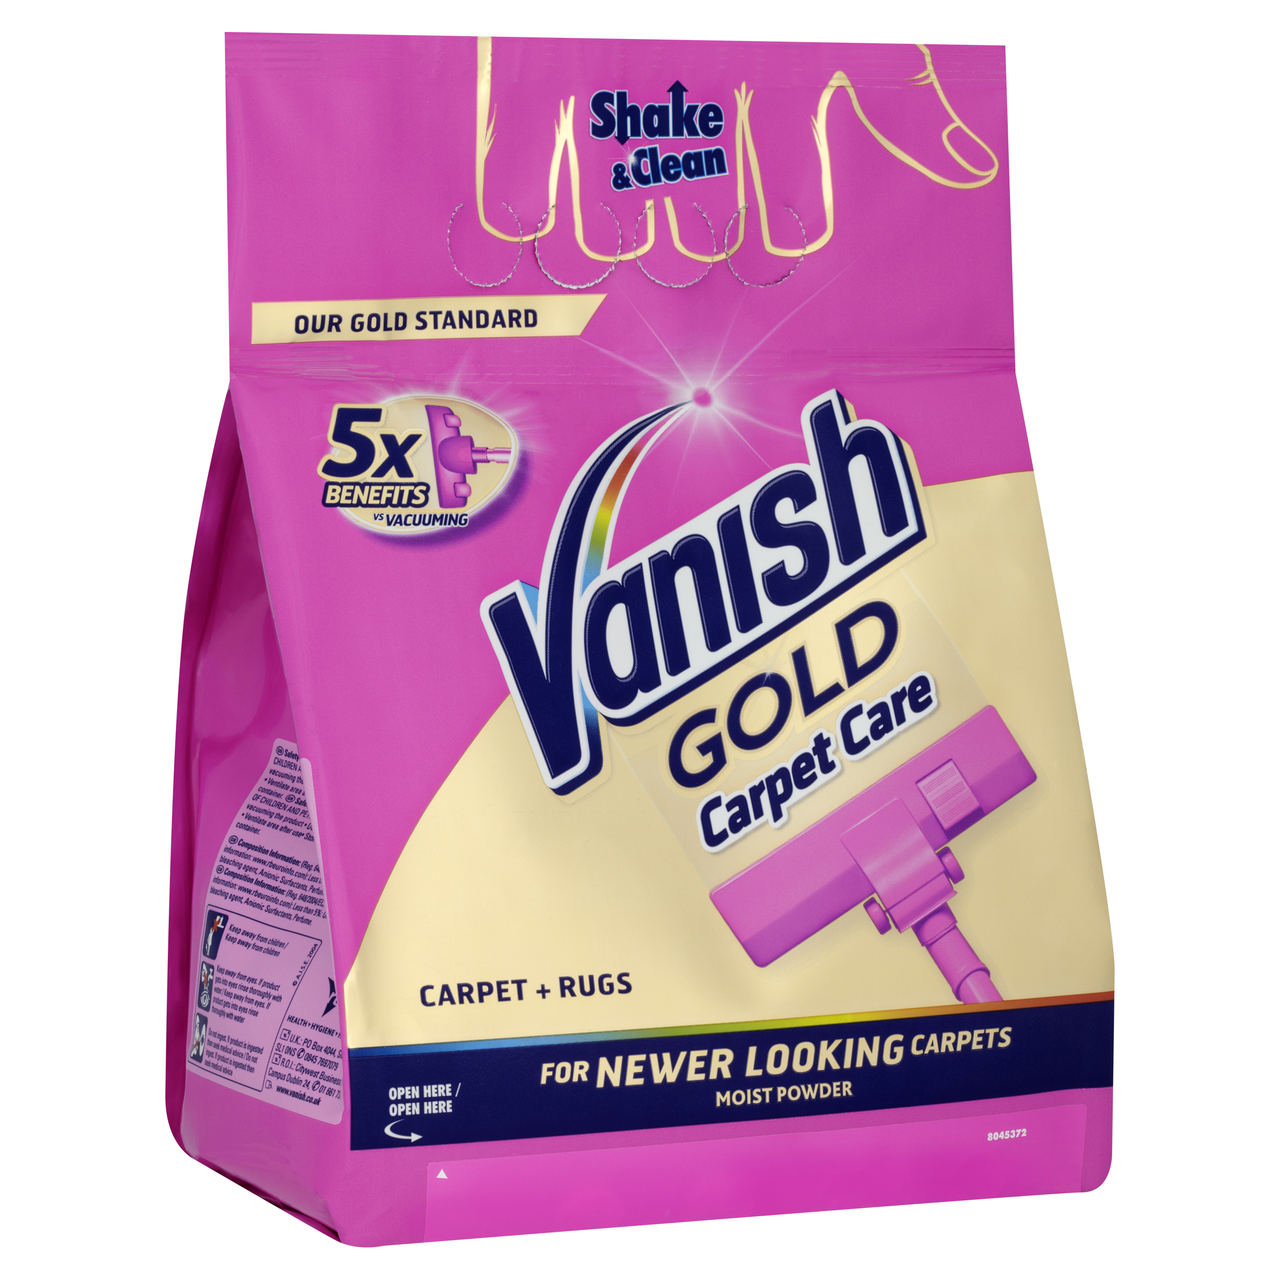 Vanish Gold Carpet Care Powder | Carpets and Rugs | Vanish UK1280 x 1280